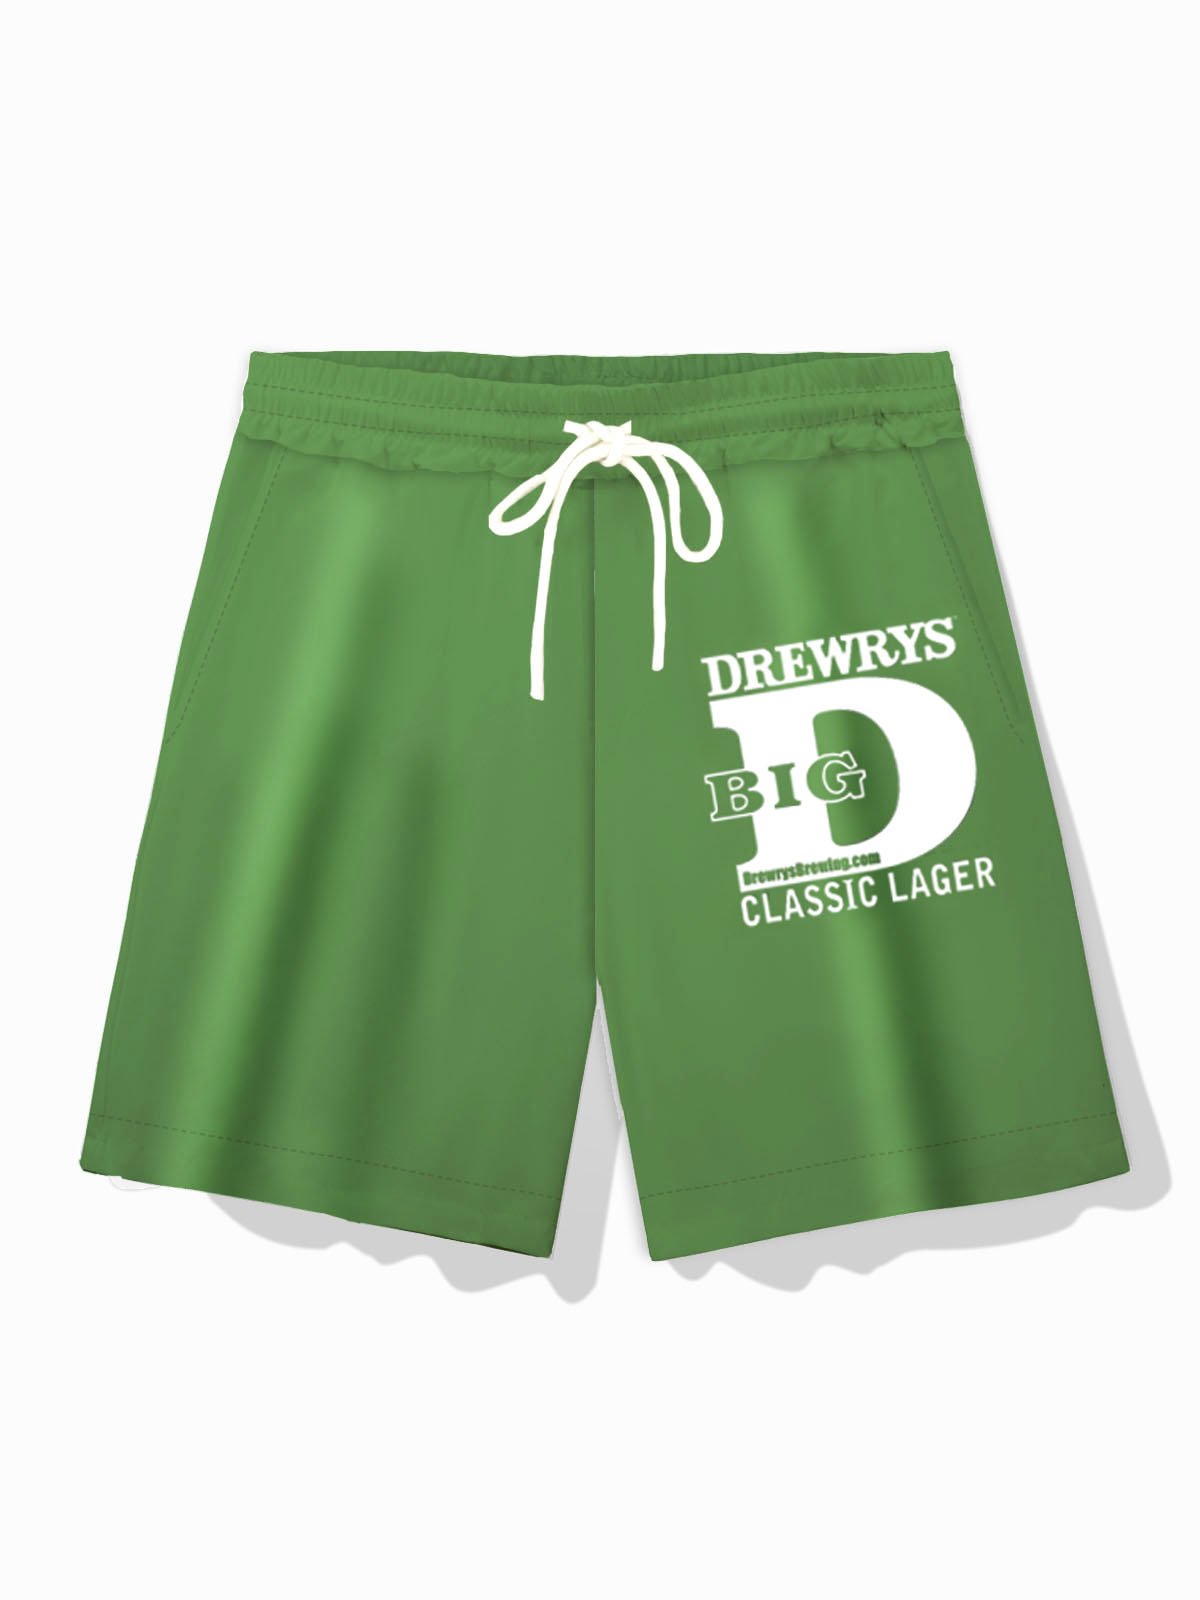 Royaura® Drewrys Beer Letter LOGO D Print Men's Basic Casual Beach Pants